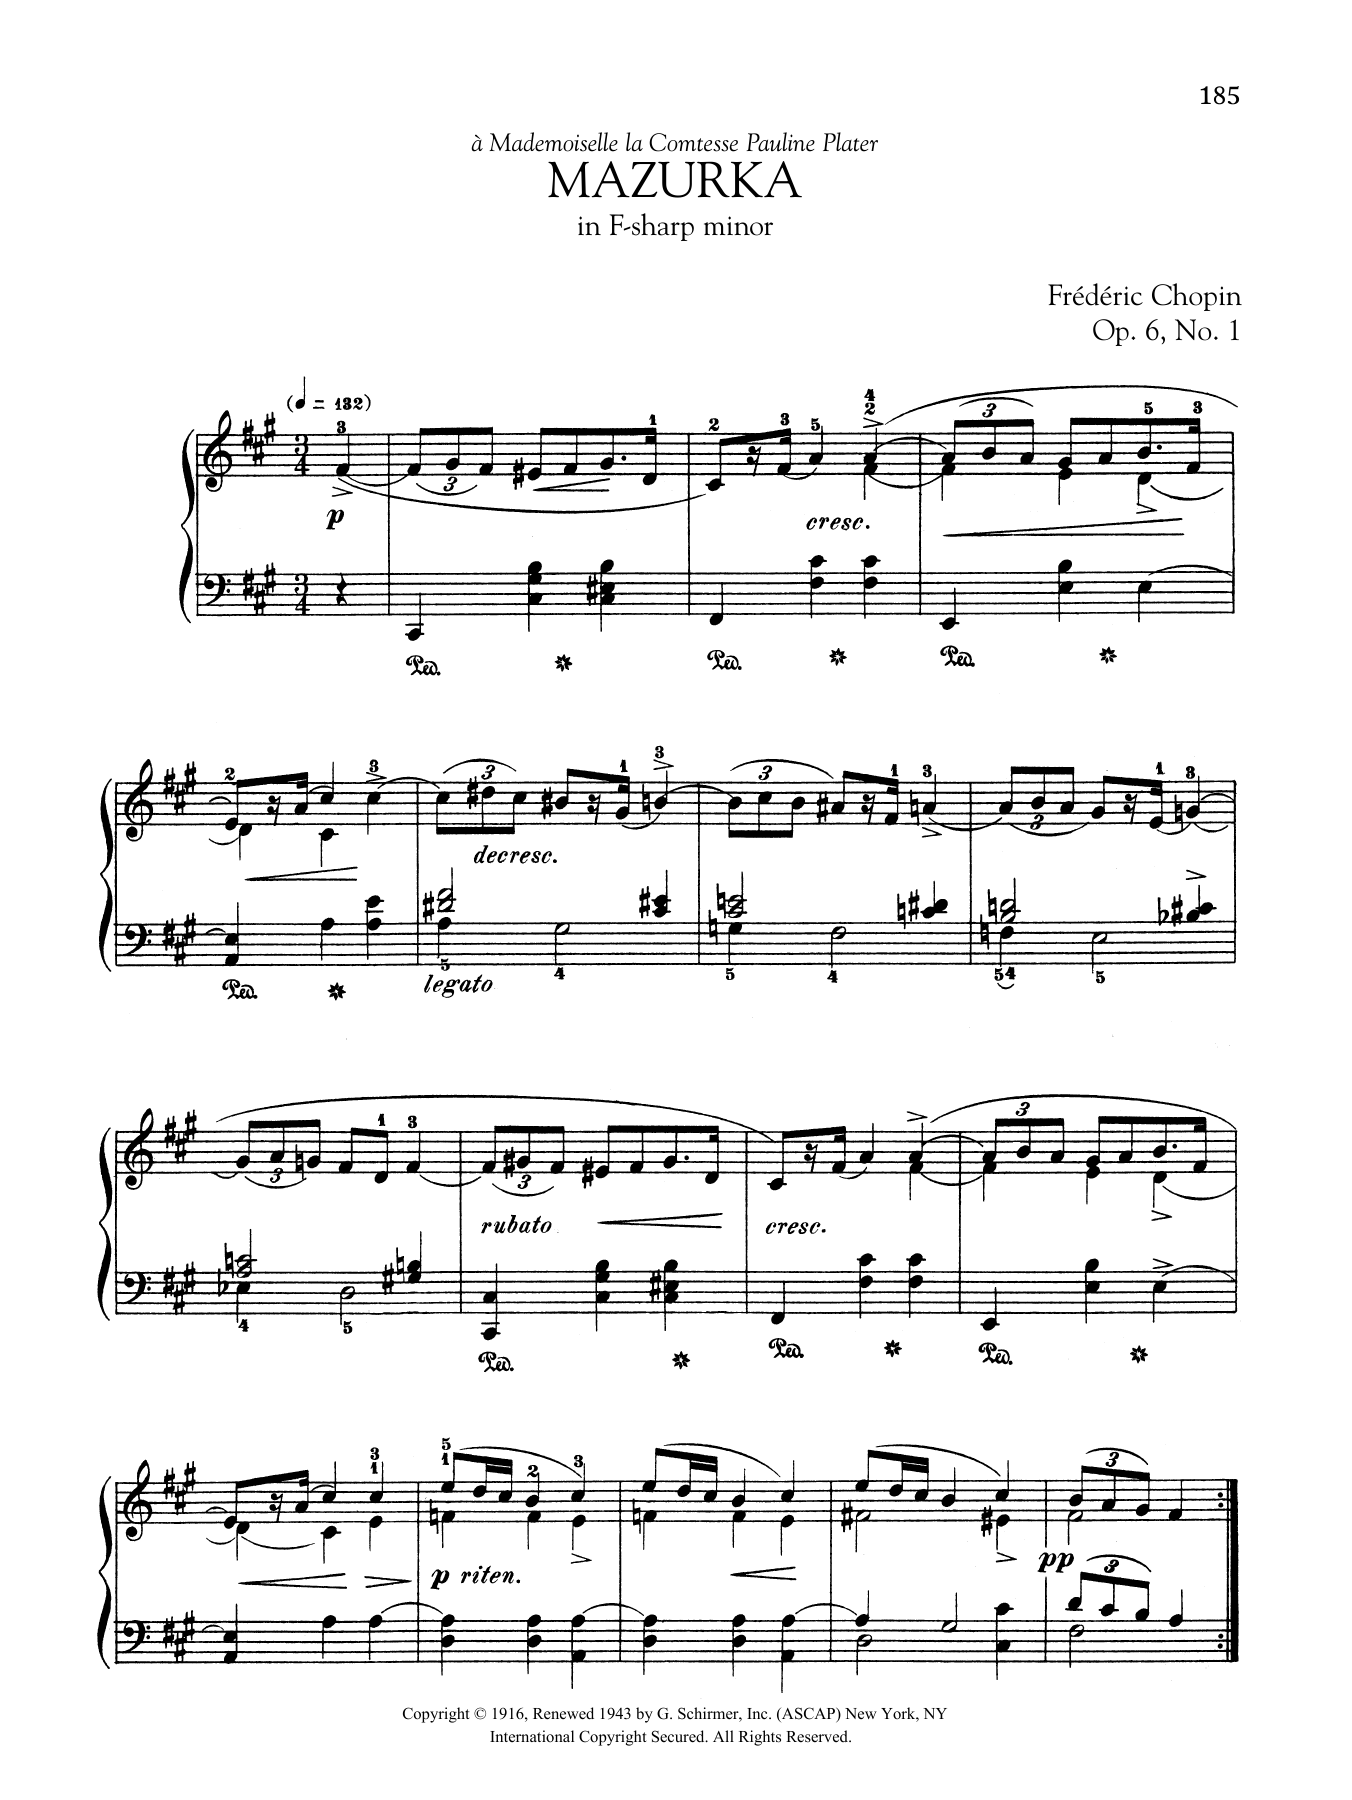 Download Frederic Chopin Mazurka in F-sharp minor, Op. 6, No. 1 Sheet Music